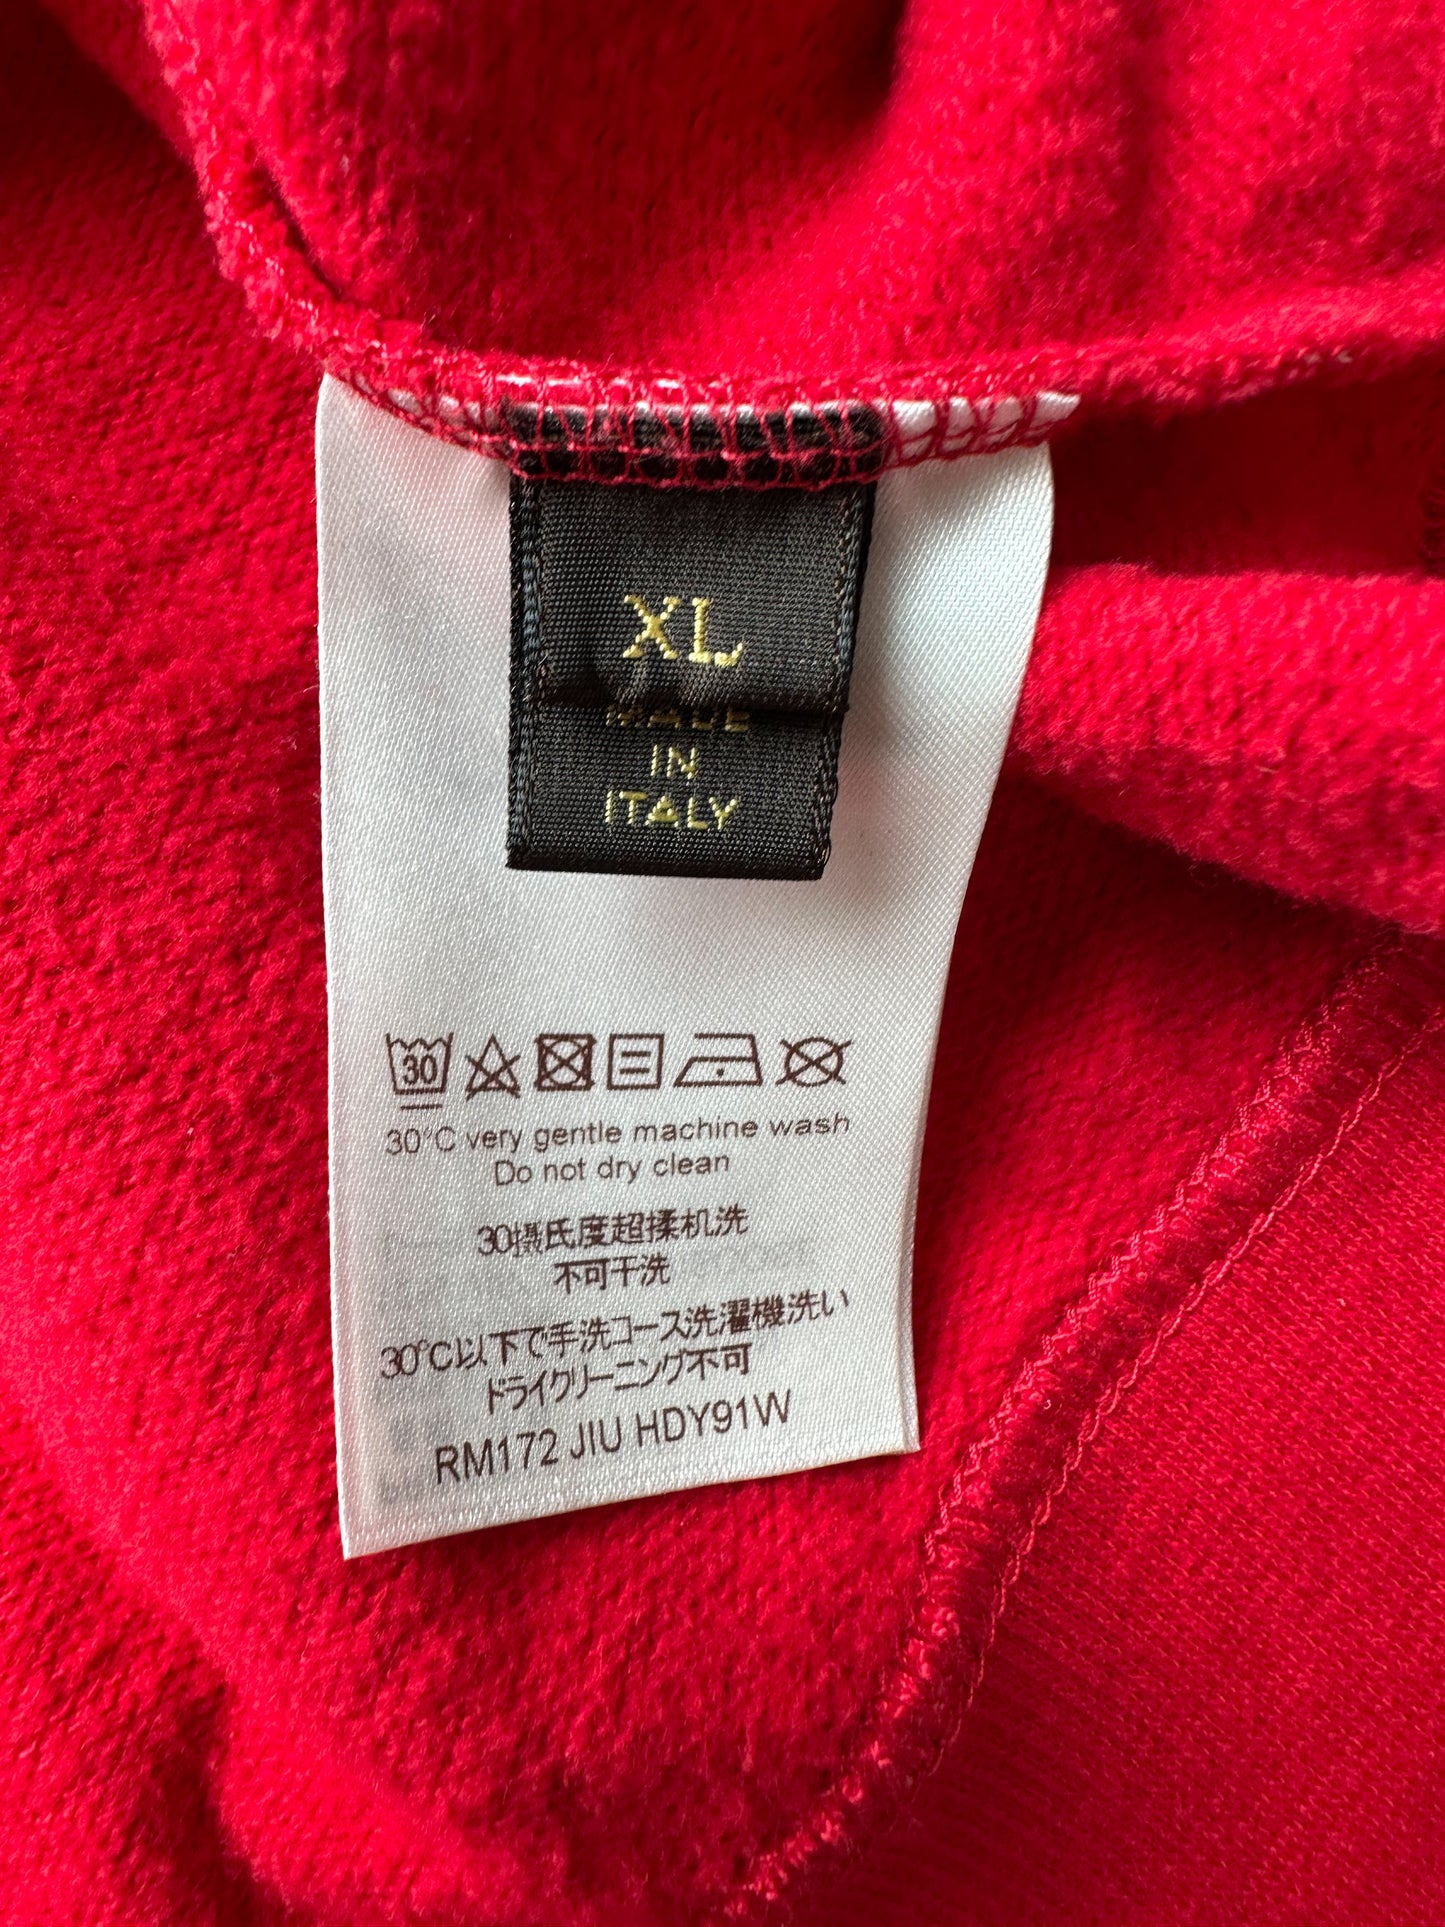 Louis Vuitton Supreme Red Monogram Box Logo Hoodie